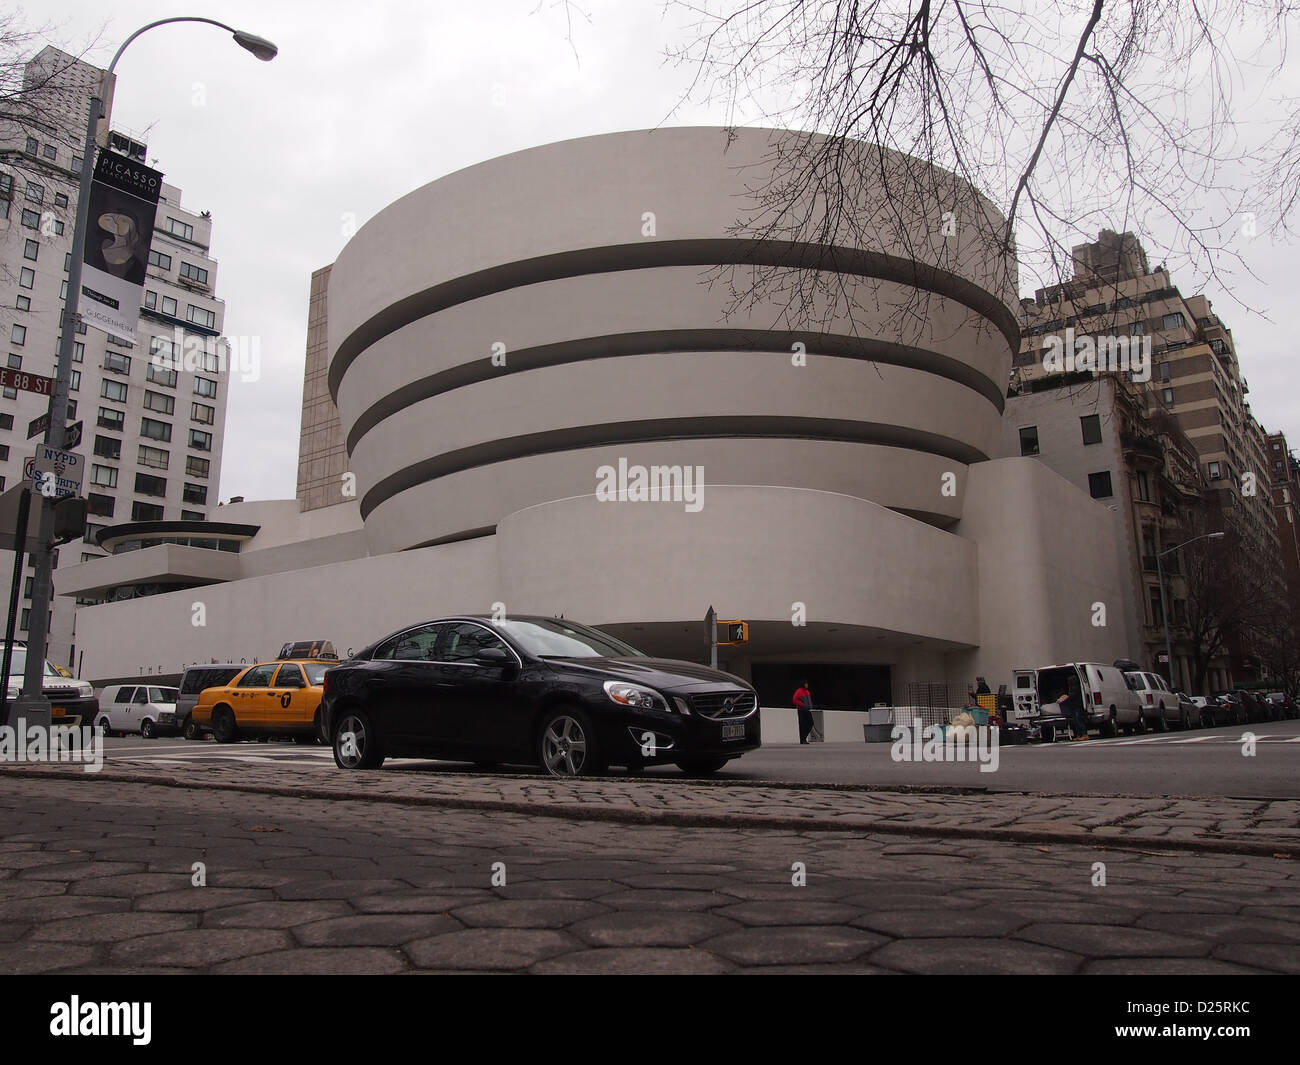 Solomon R. Guggenheim Museum, New York, New York USA Banque D'Images